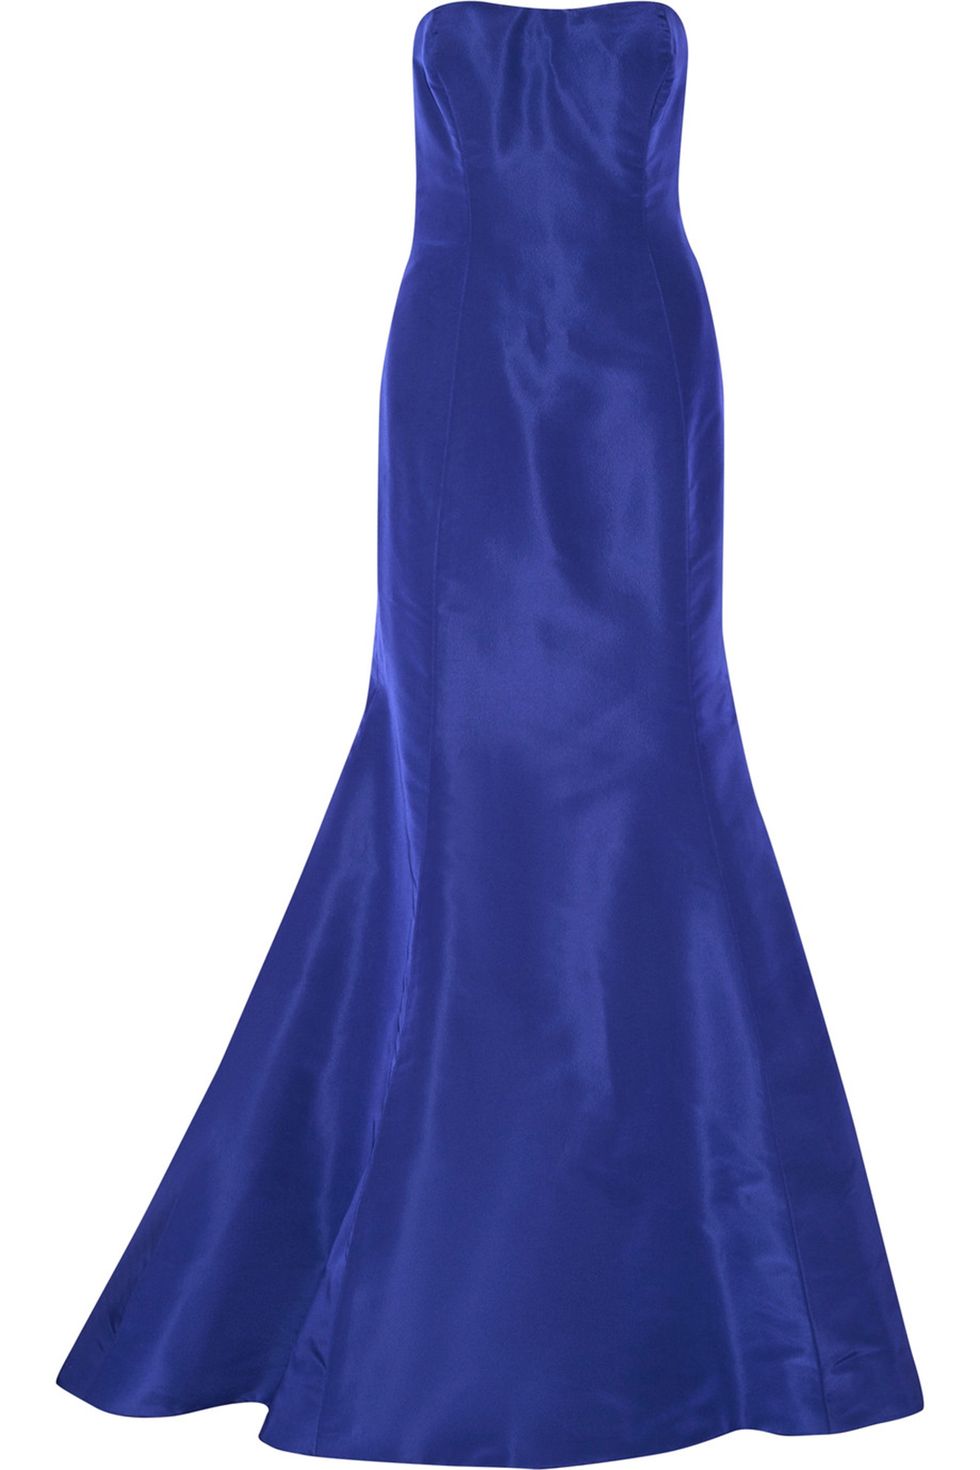 Cobalt blue, Clothing, Dress, Blue, Purple, Day dress, Electric blue, Cocktail dress, Violet, A-line, 